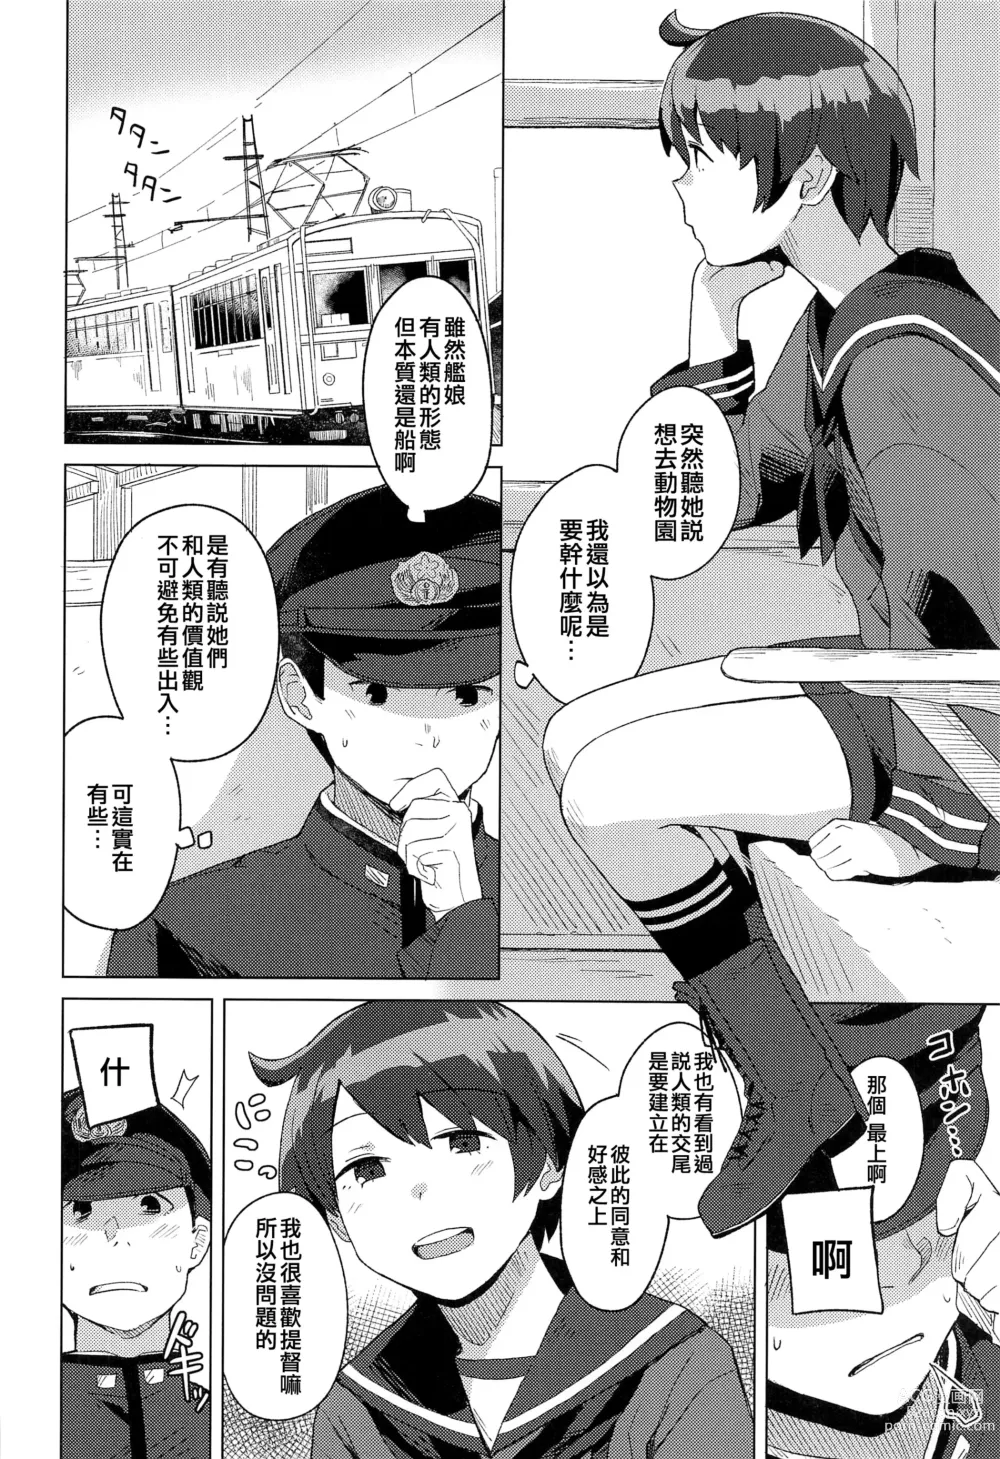 Page 6 of doujinshi Superlative!